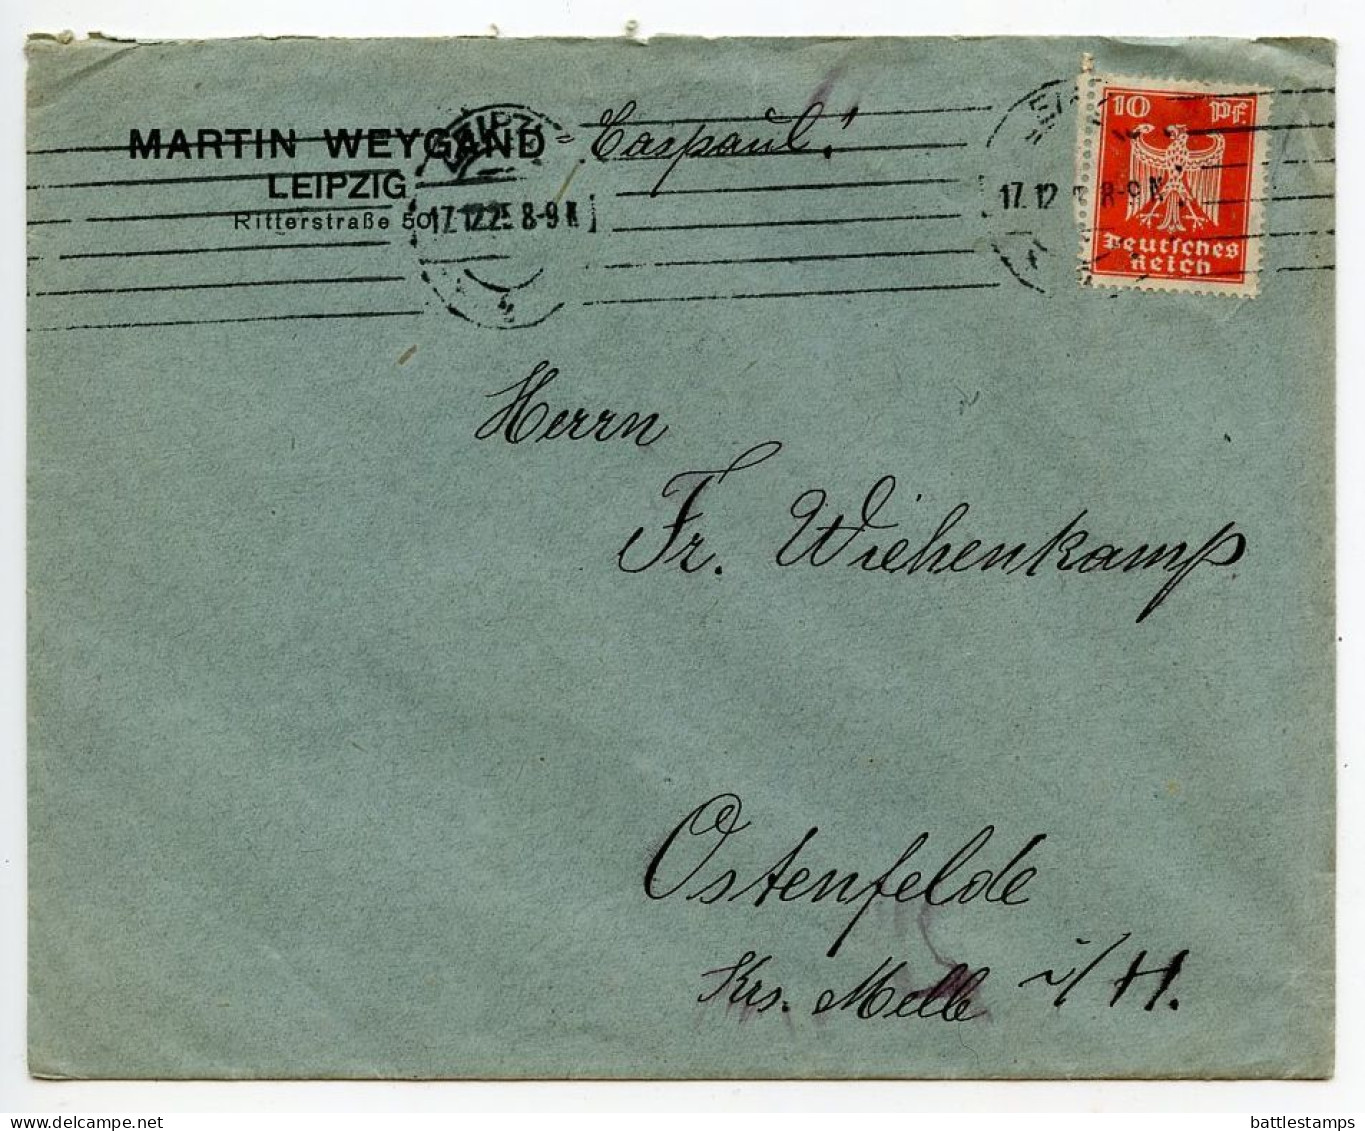 Germany 1925 Cover & Invoice; Leipzig - Martin Weygand, Rauchwaren Felle Haute; 10pf. German Eagle - Covers & Documents